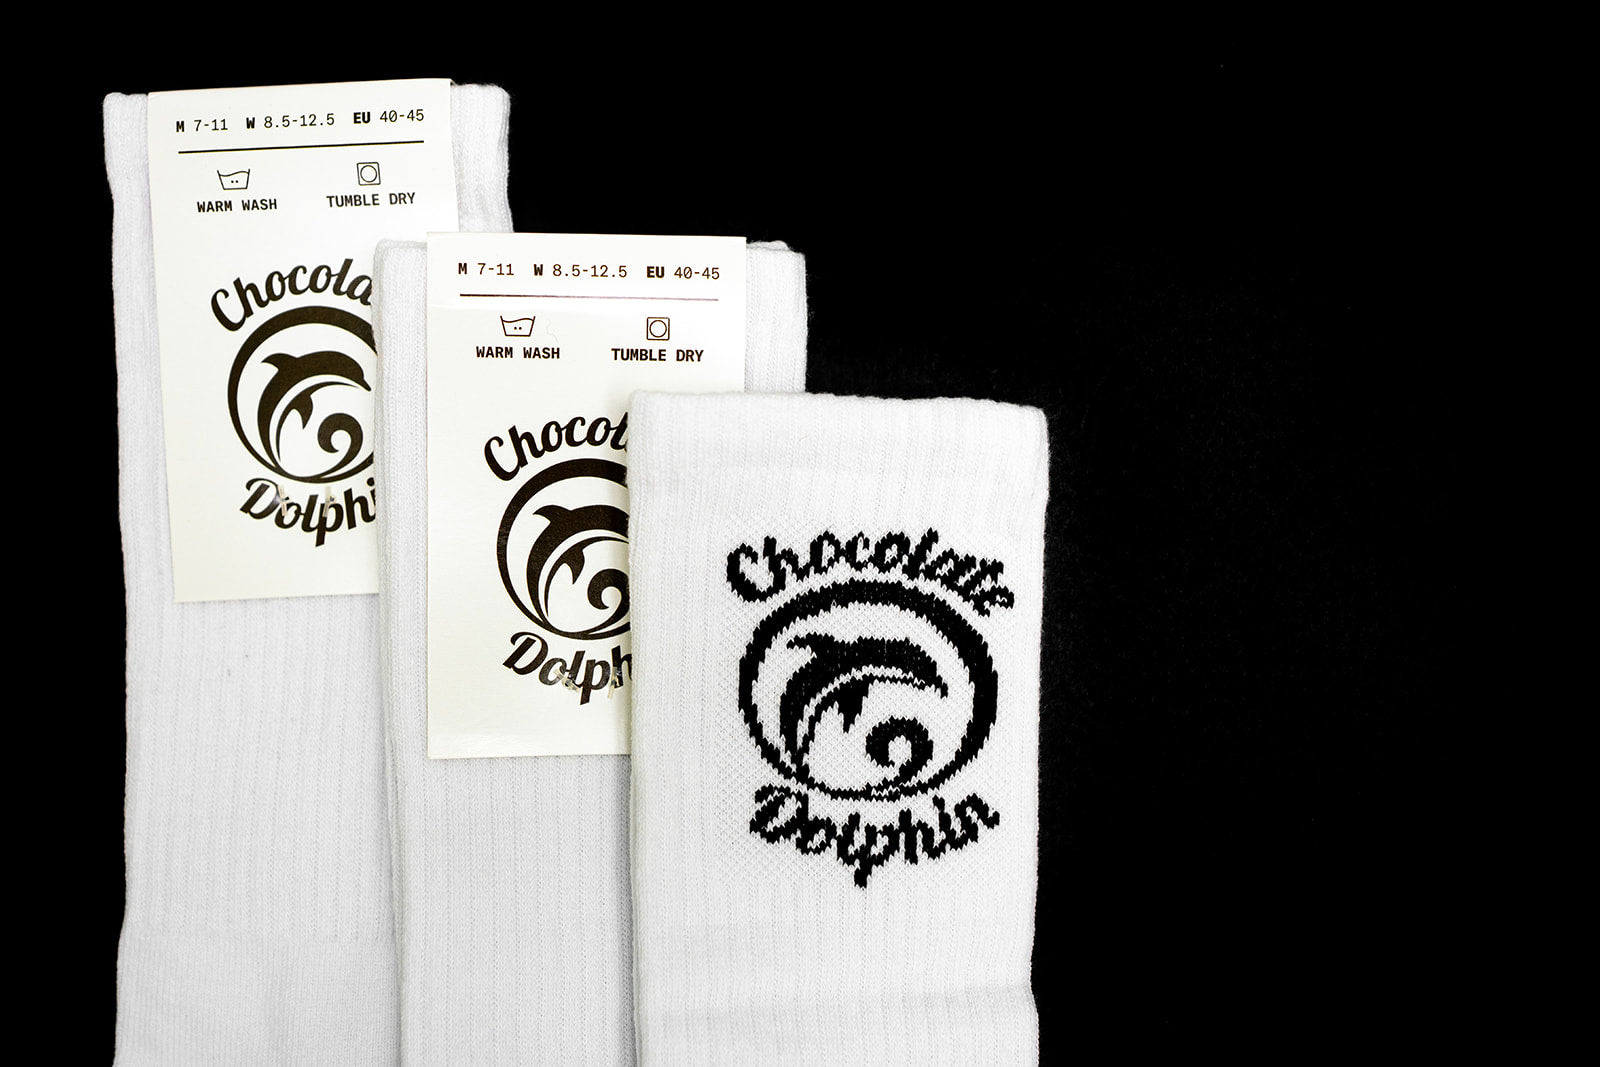 Chocolate Dolphin Tube socks